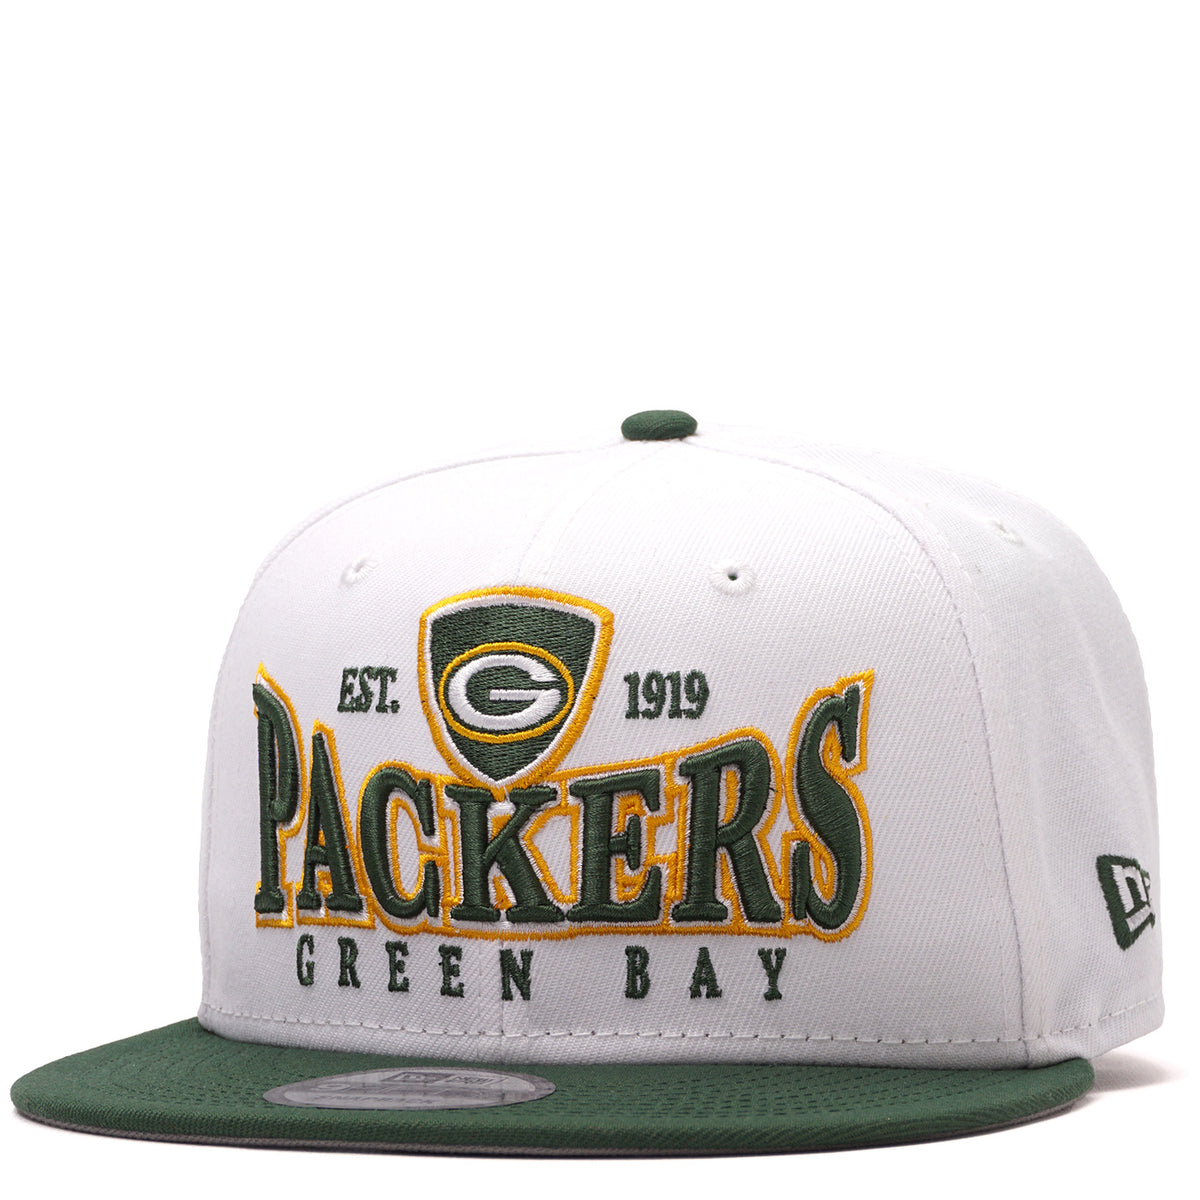 New Era - Green Bay Packers Crest Snapback Hat